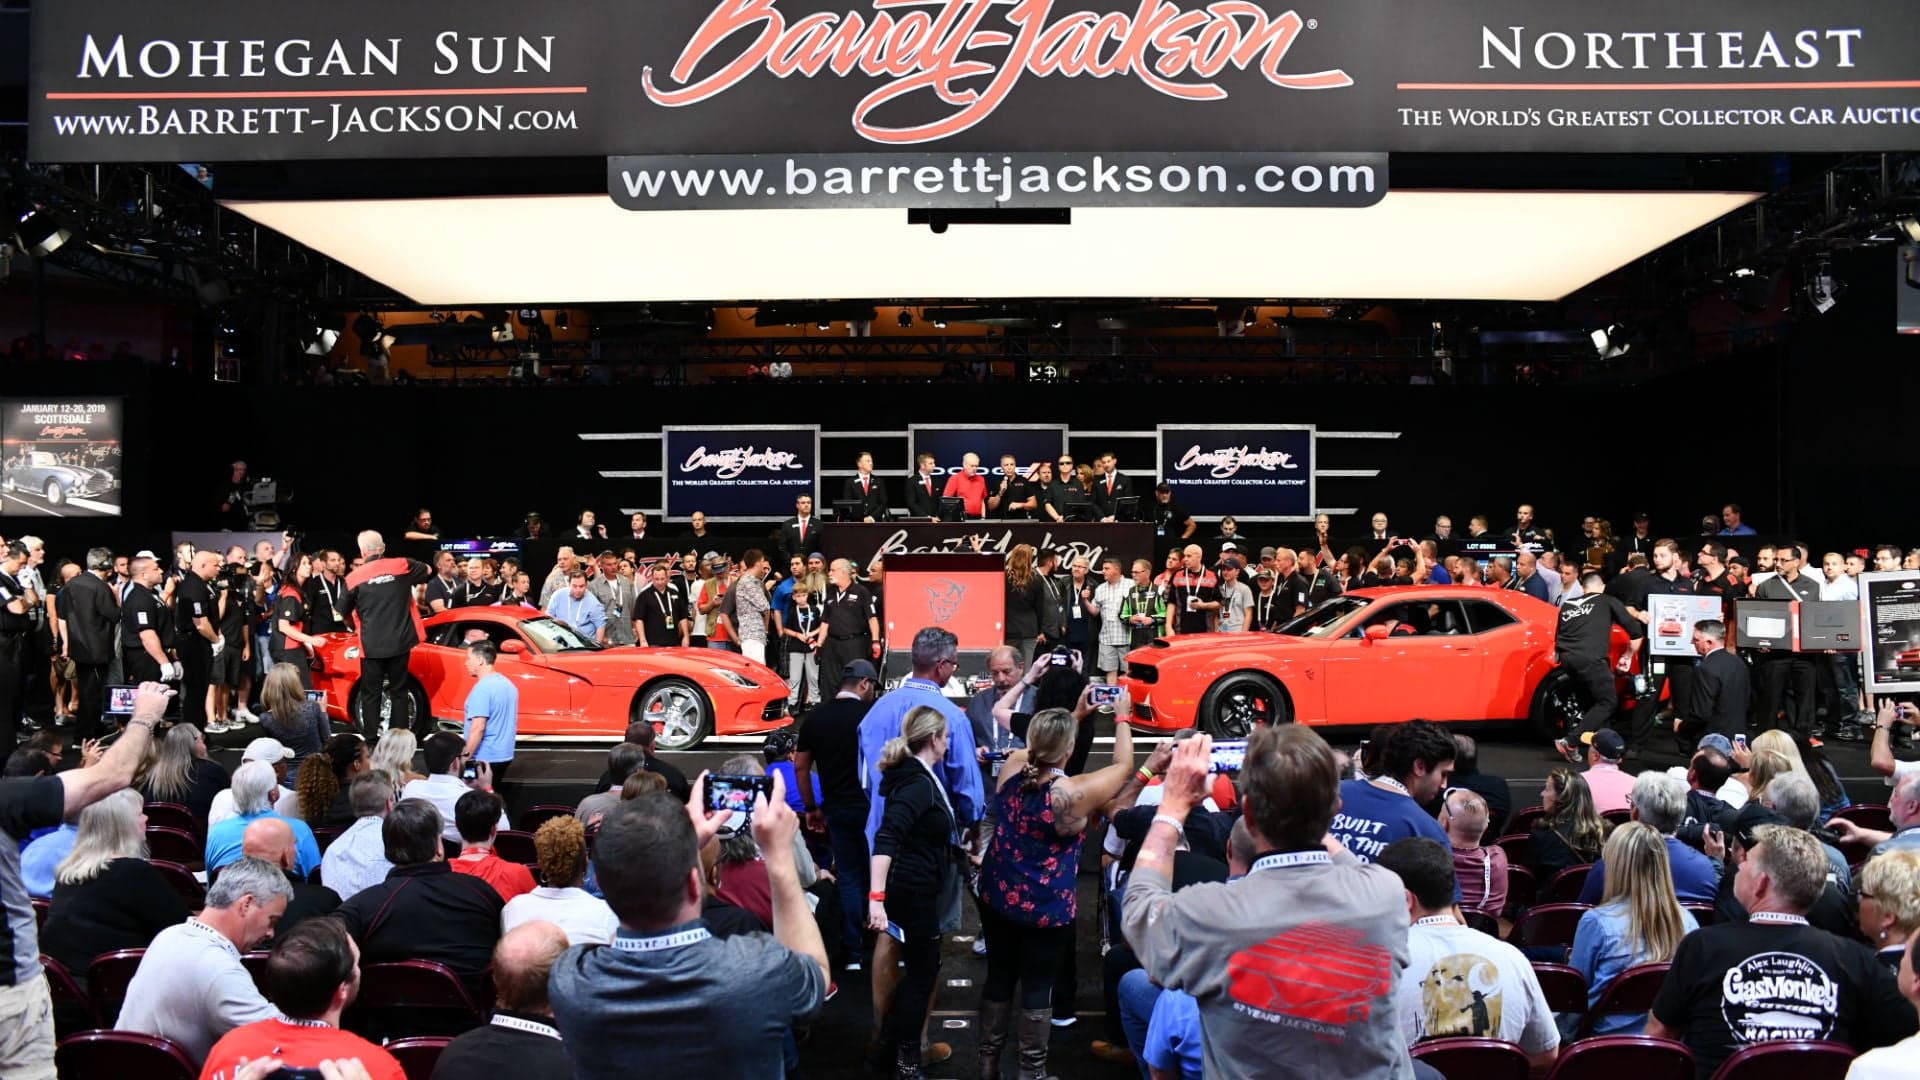 Dodge SRT Viper-Demon Pair Yields $1 Million for Charity at Barrett-Jackson Auction